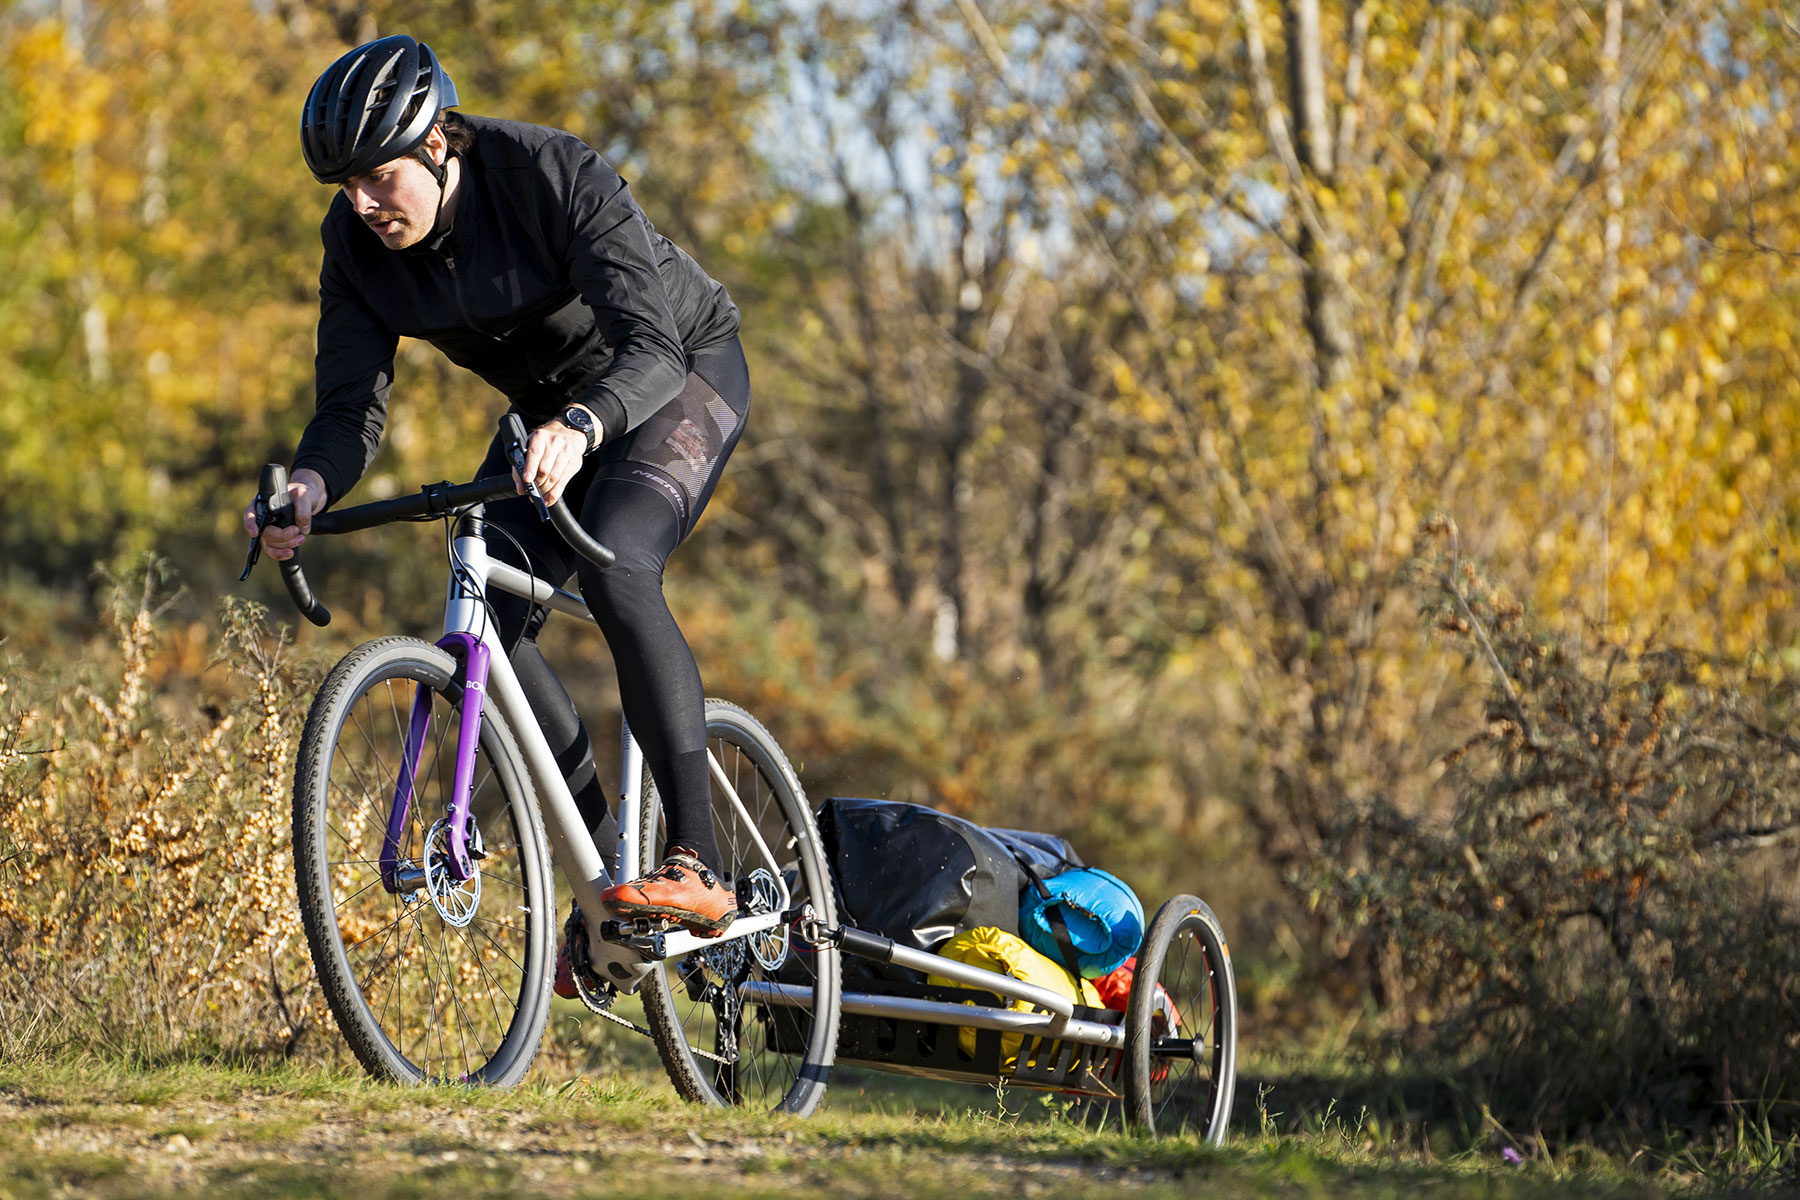 Veolo Bike Trailer, a lightweight modular bicycle cargo trailer, made-in Germany, now on Kickstarter, gravel